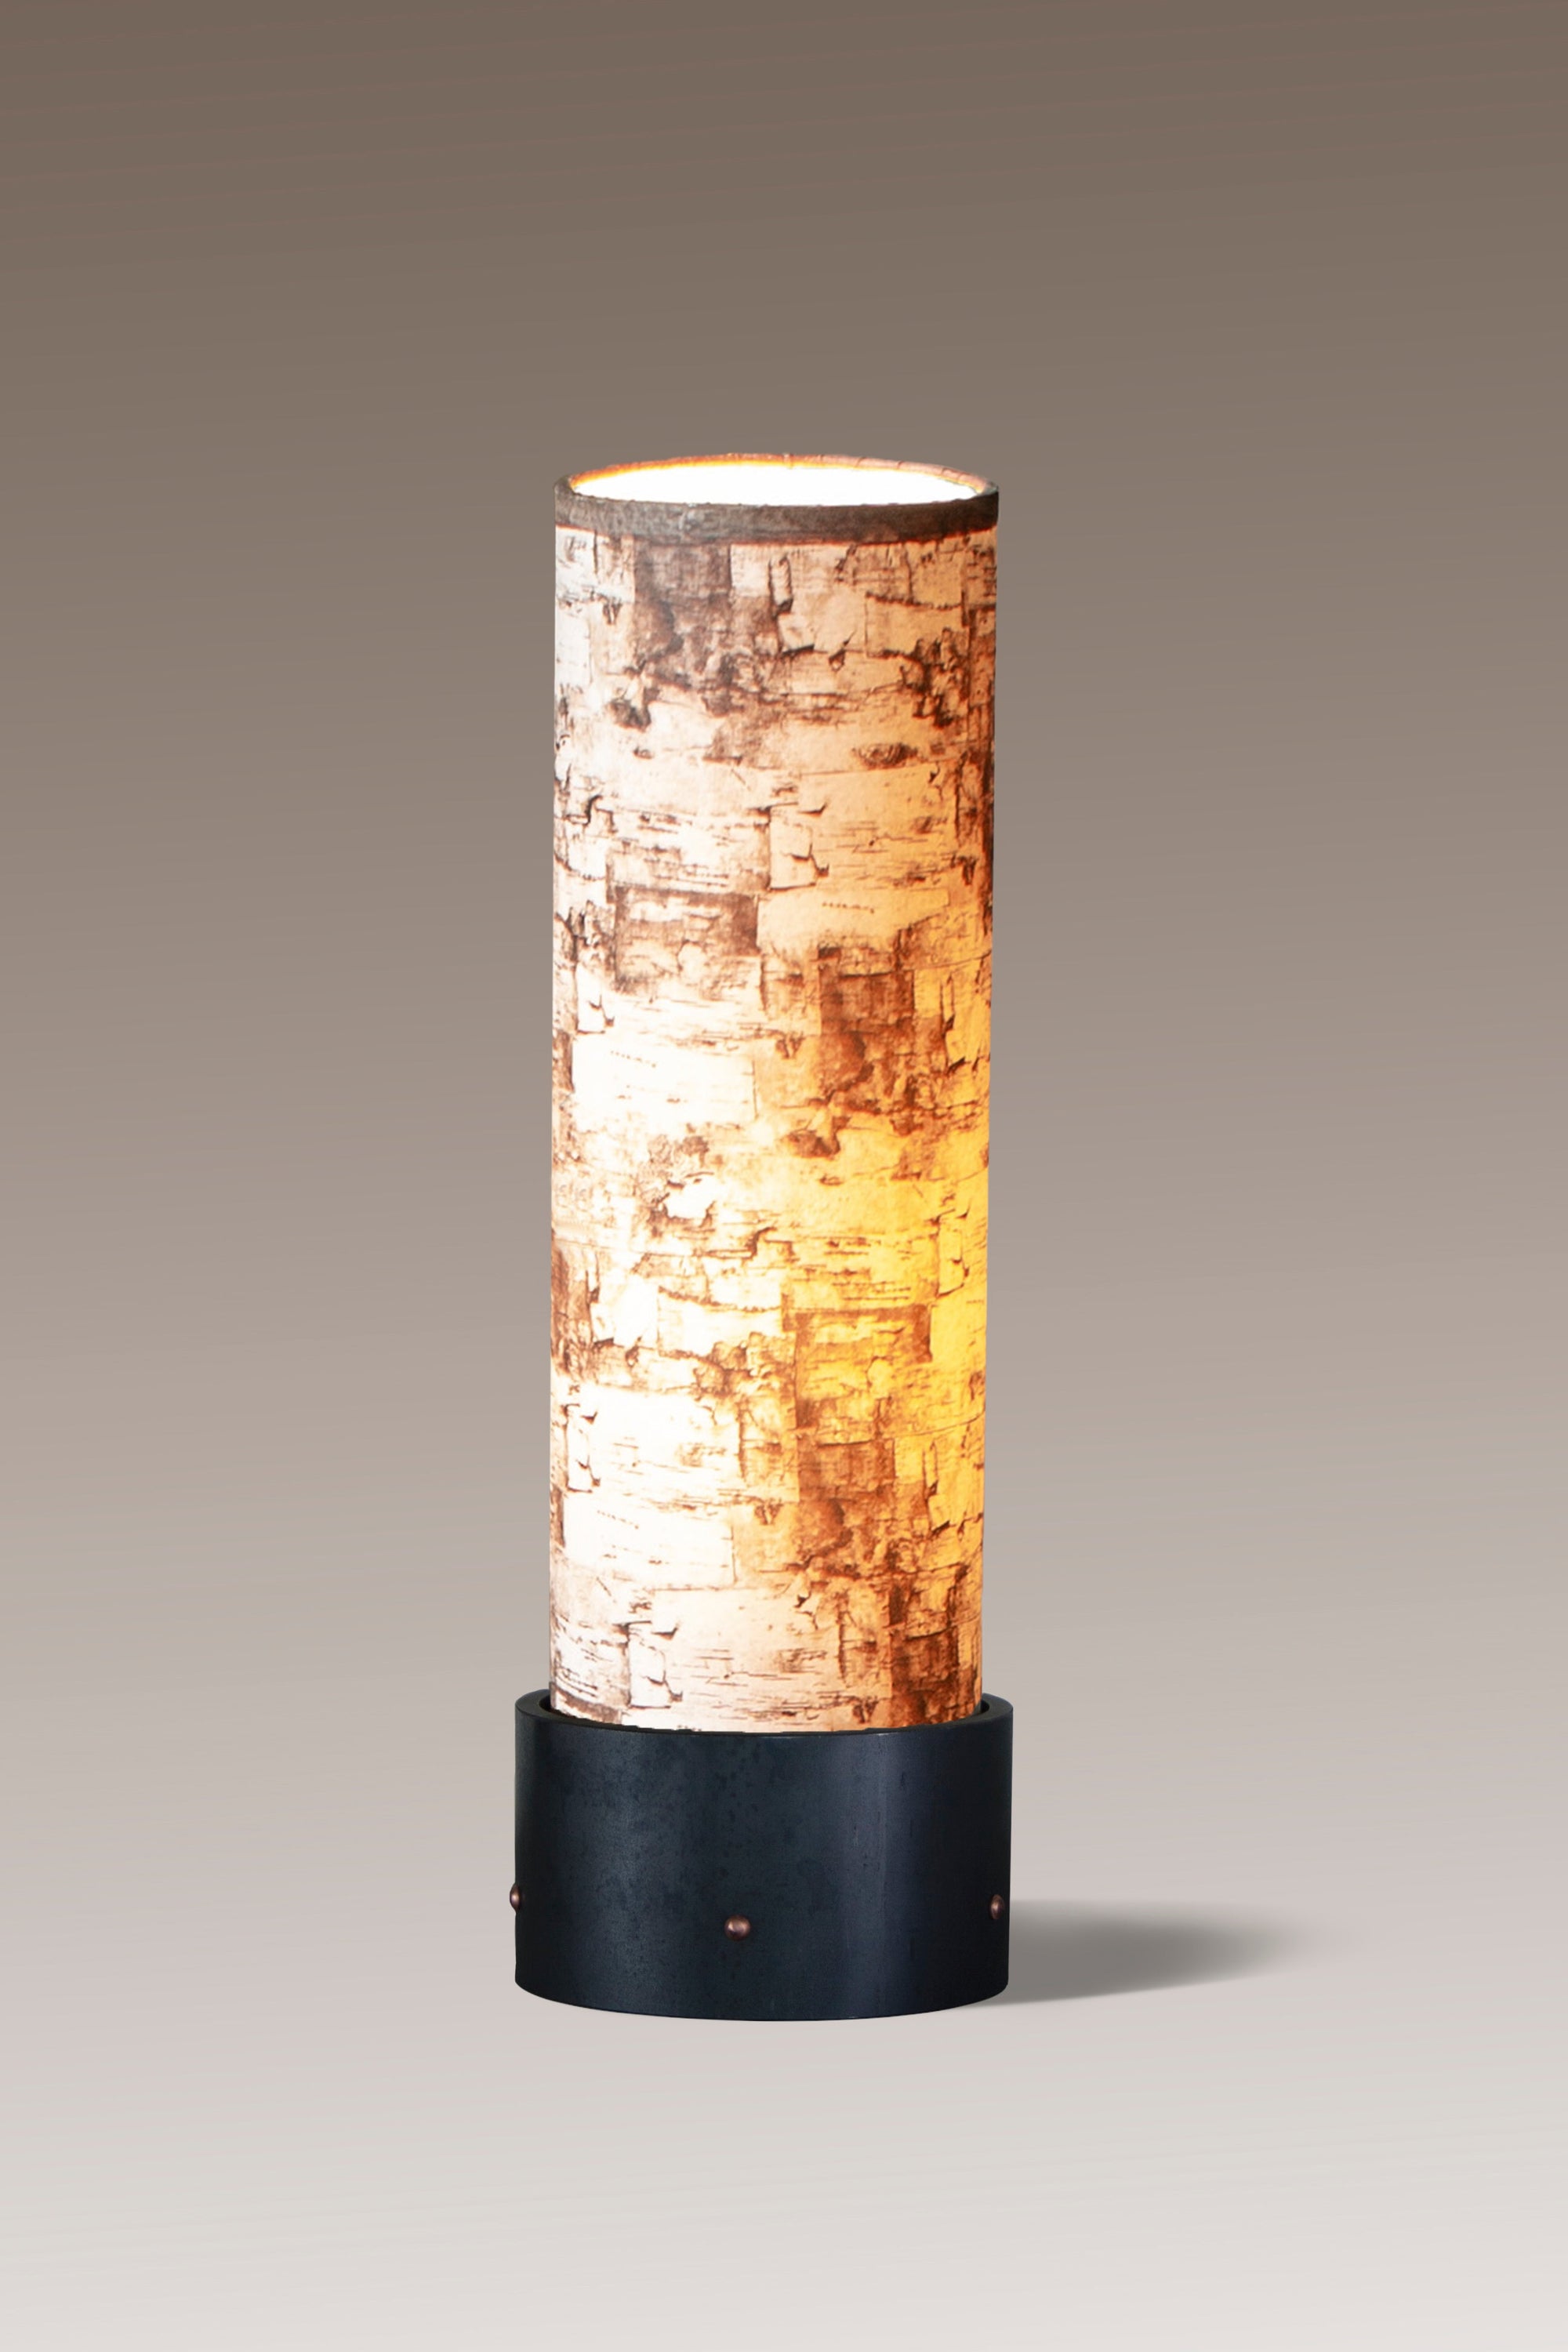 Janna Ugone & Co Luminaires Steel Luminaire Accent Lamp with Birch Bark Shade